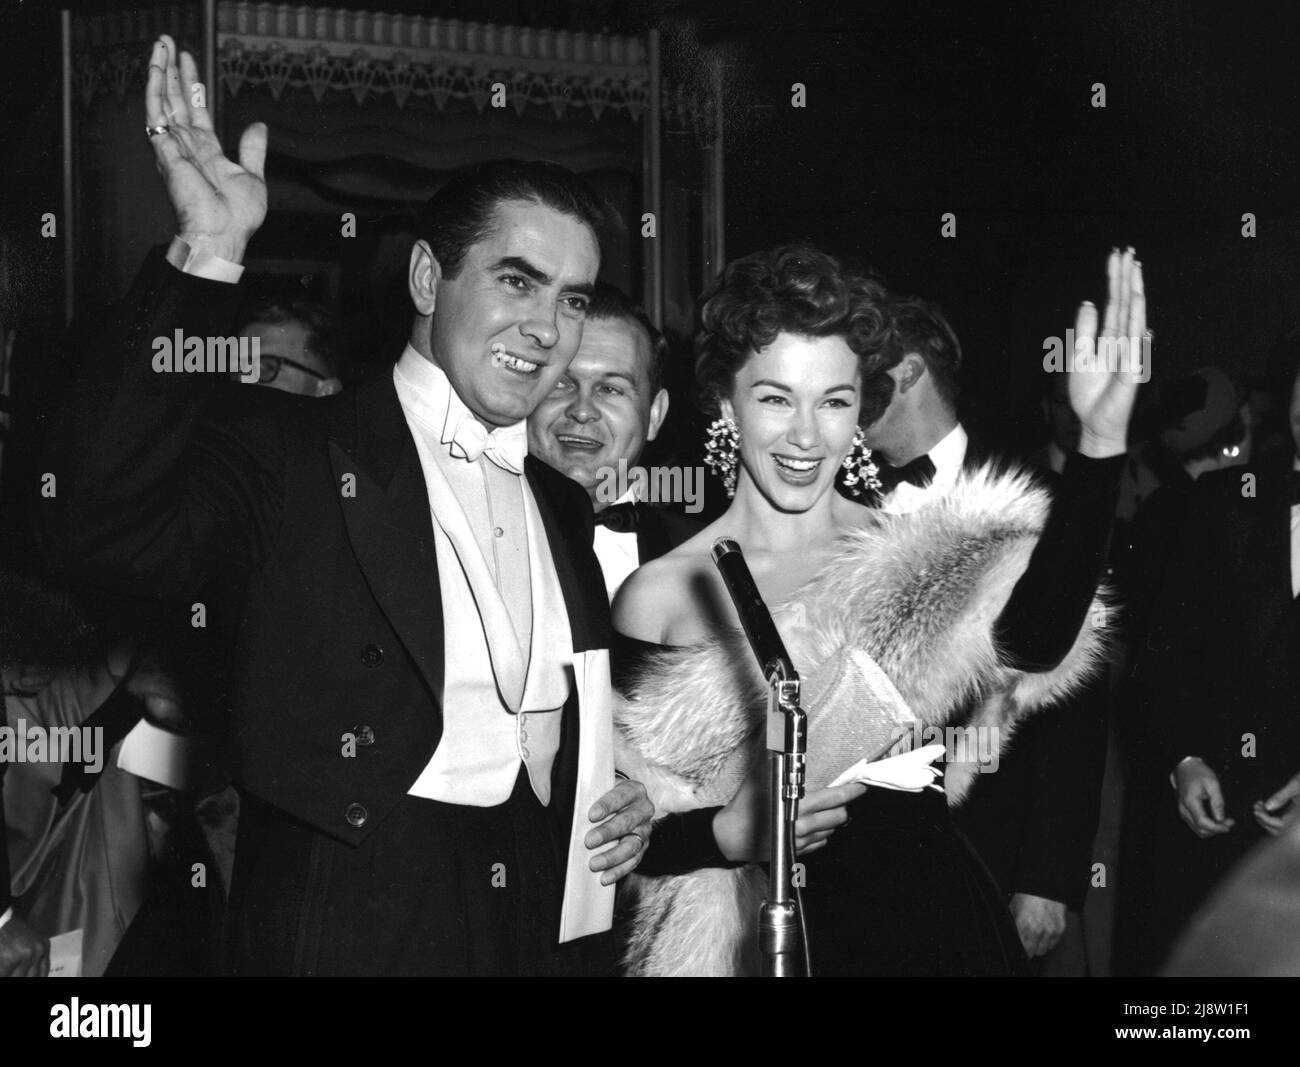 Tyrone Power, moglie Linda Christian, 26th Academy Awards -1954. Riferimento file n. 34145-830THA Foto Stock